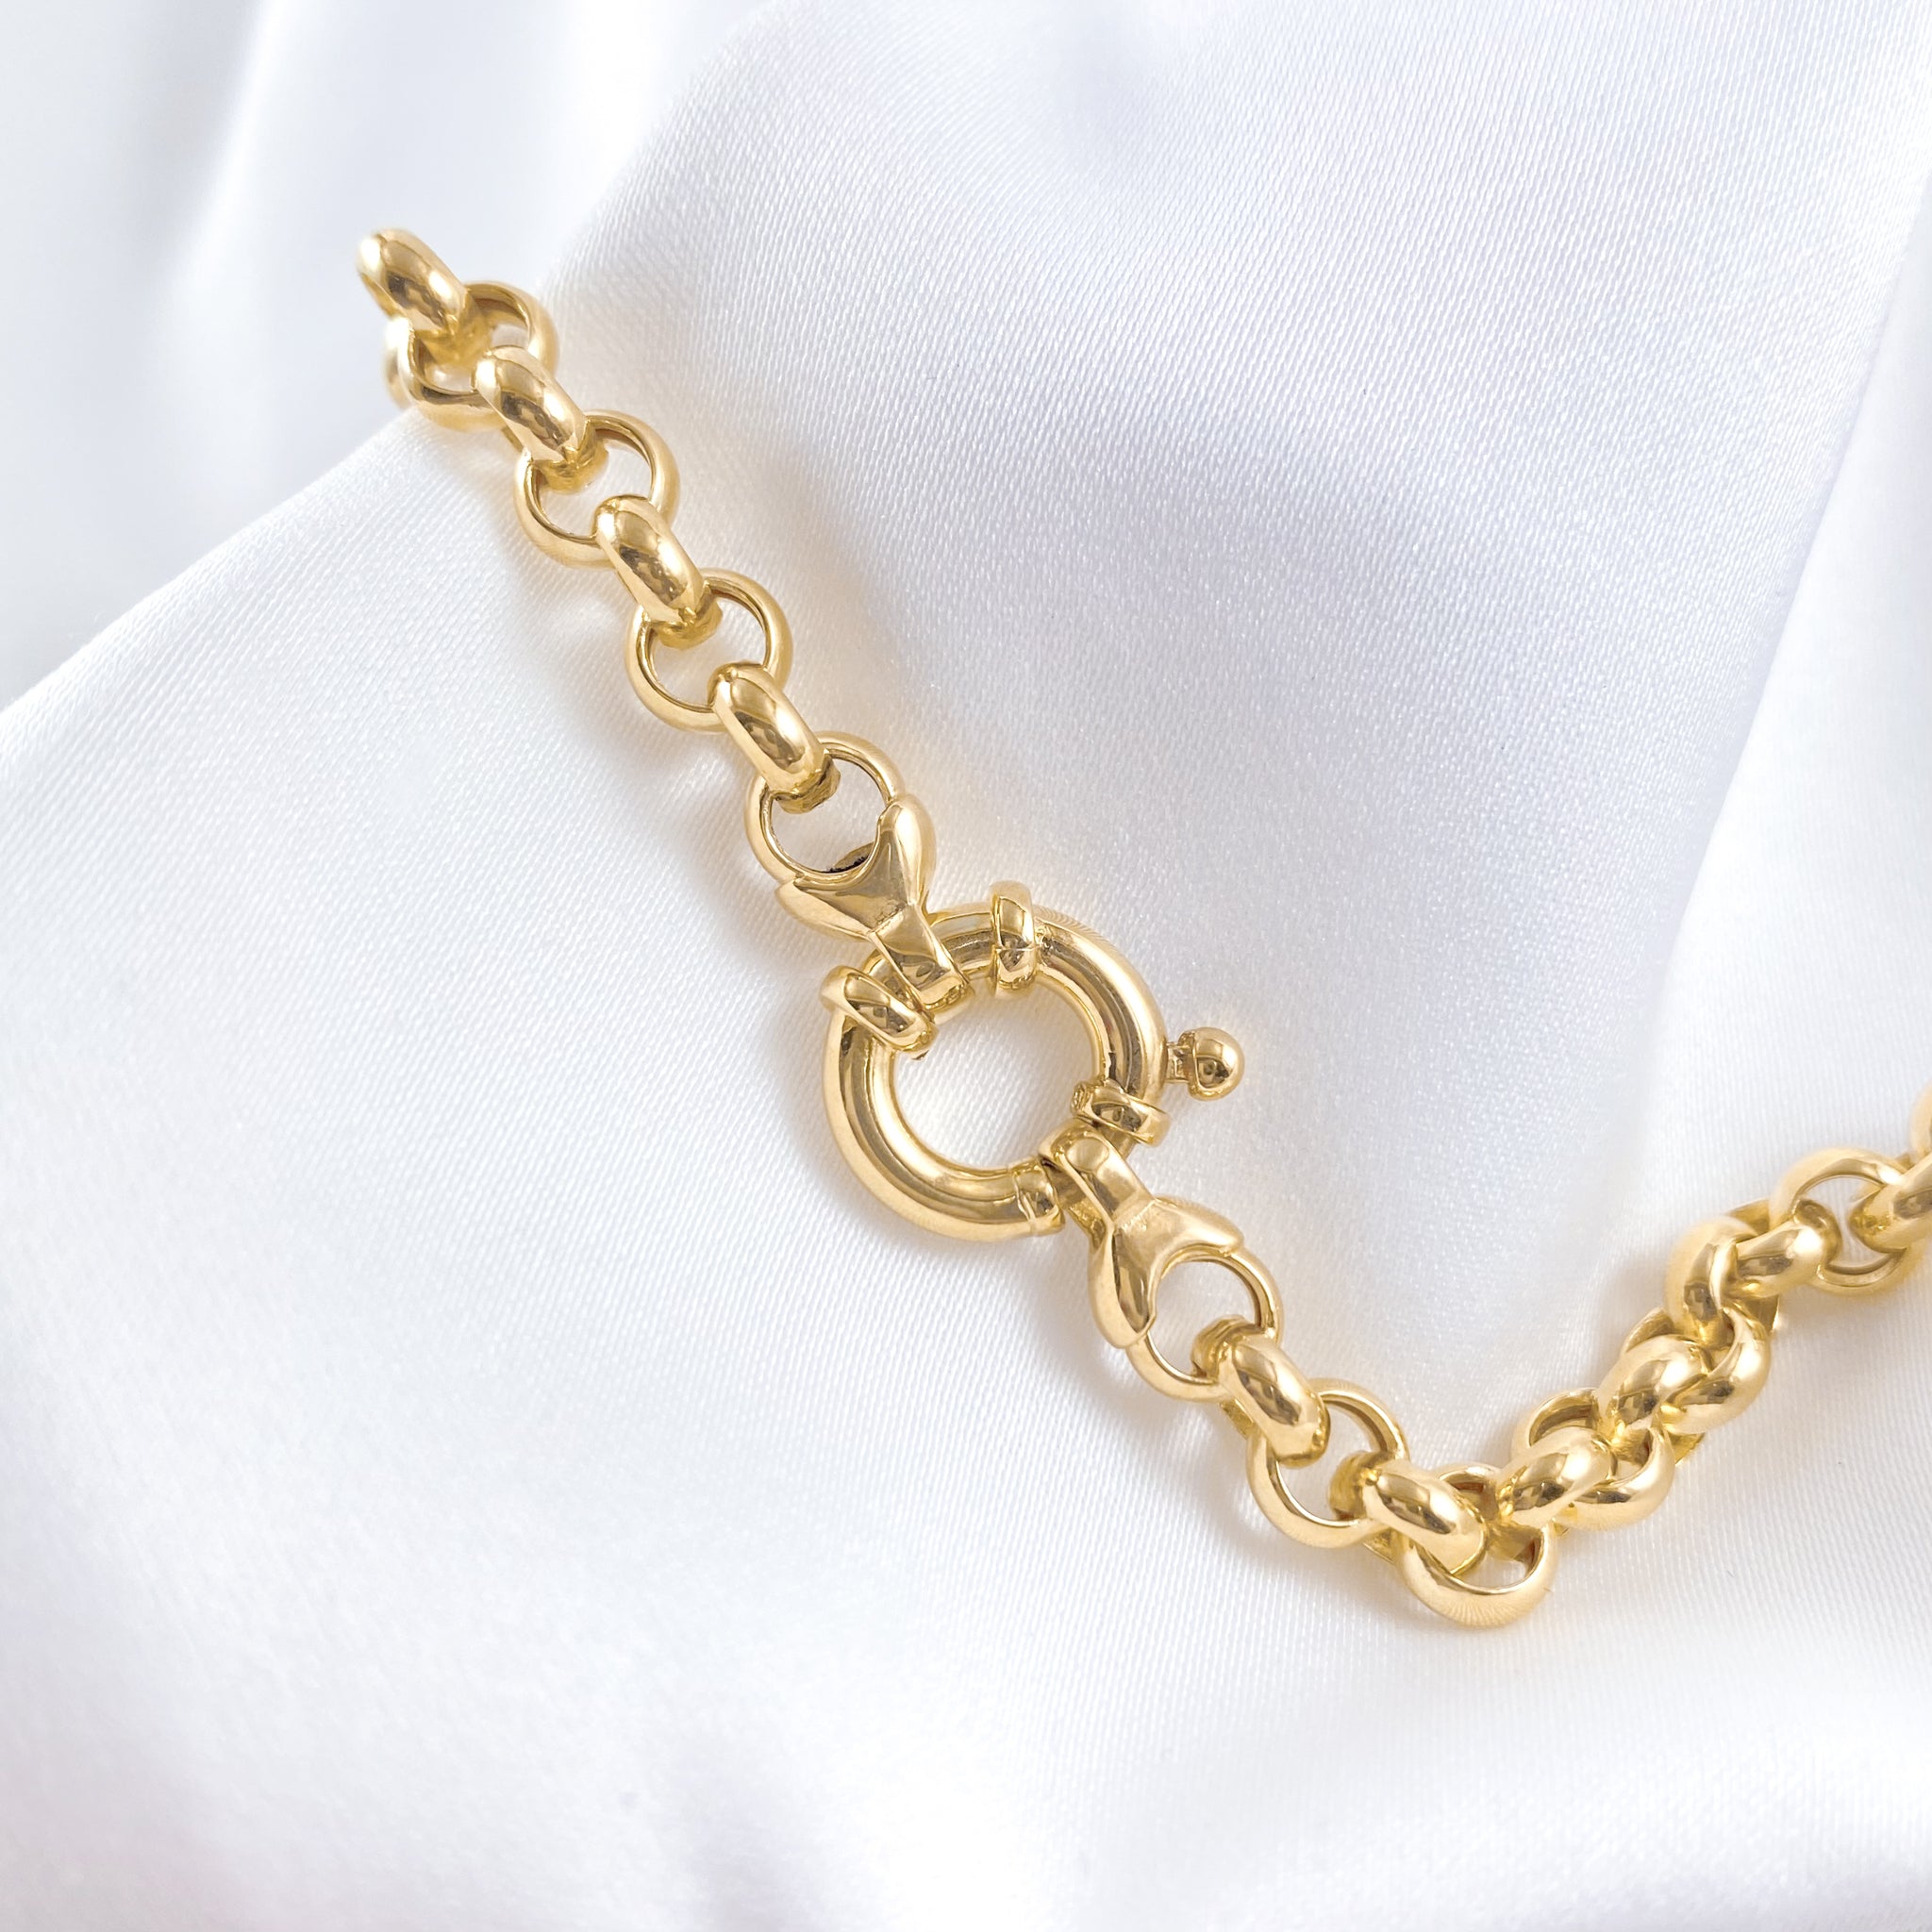 Solid Gold Jasseron Necklace